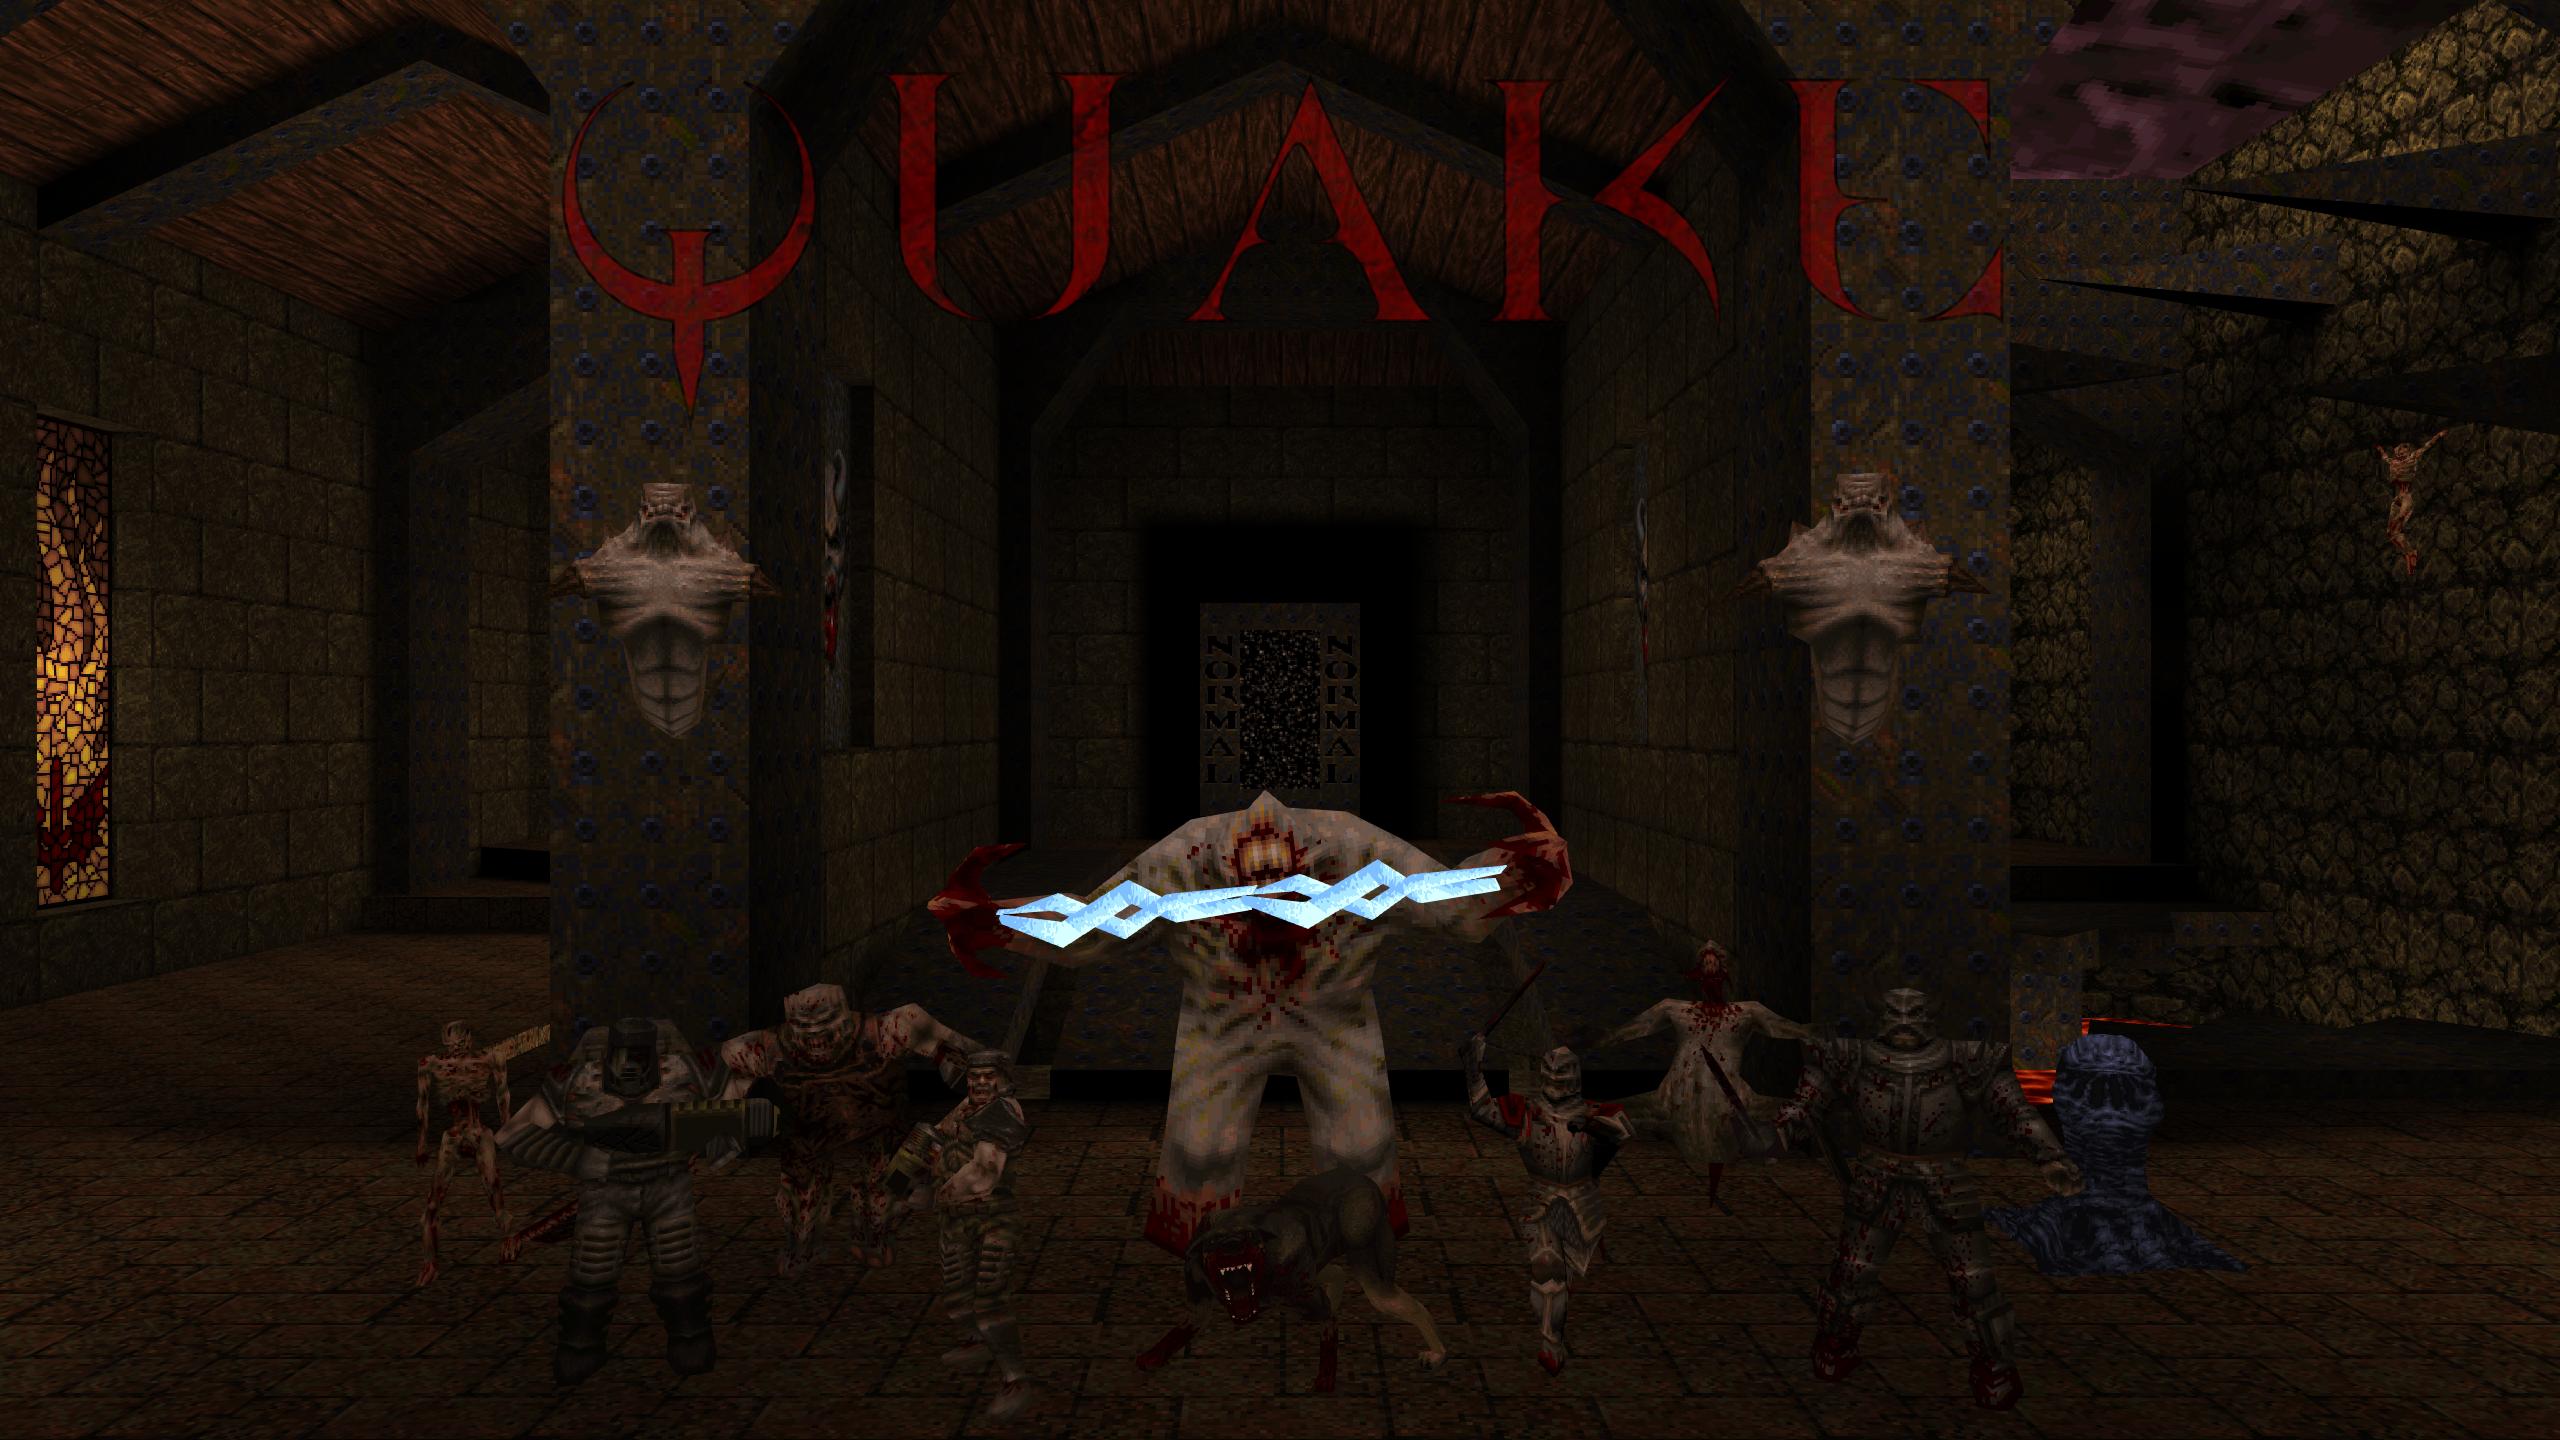 download the new Quake